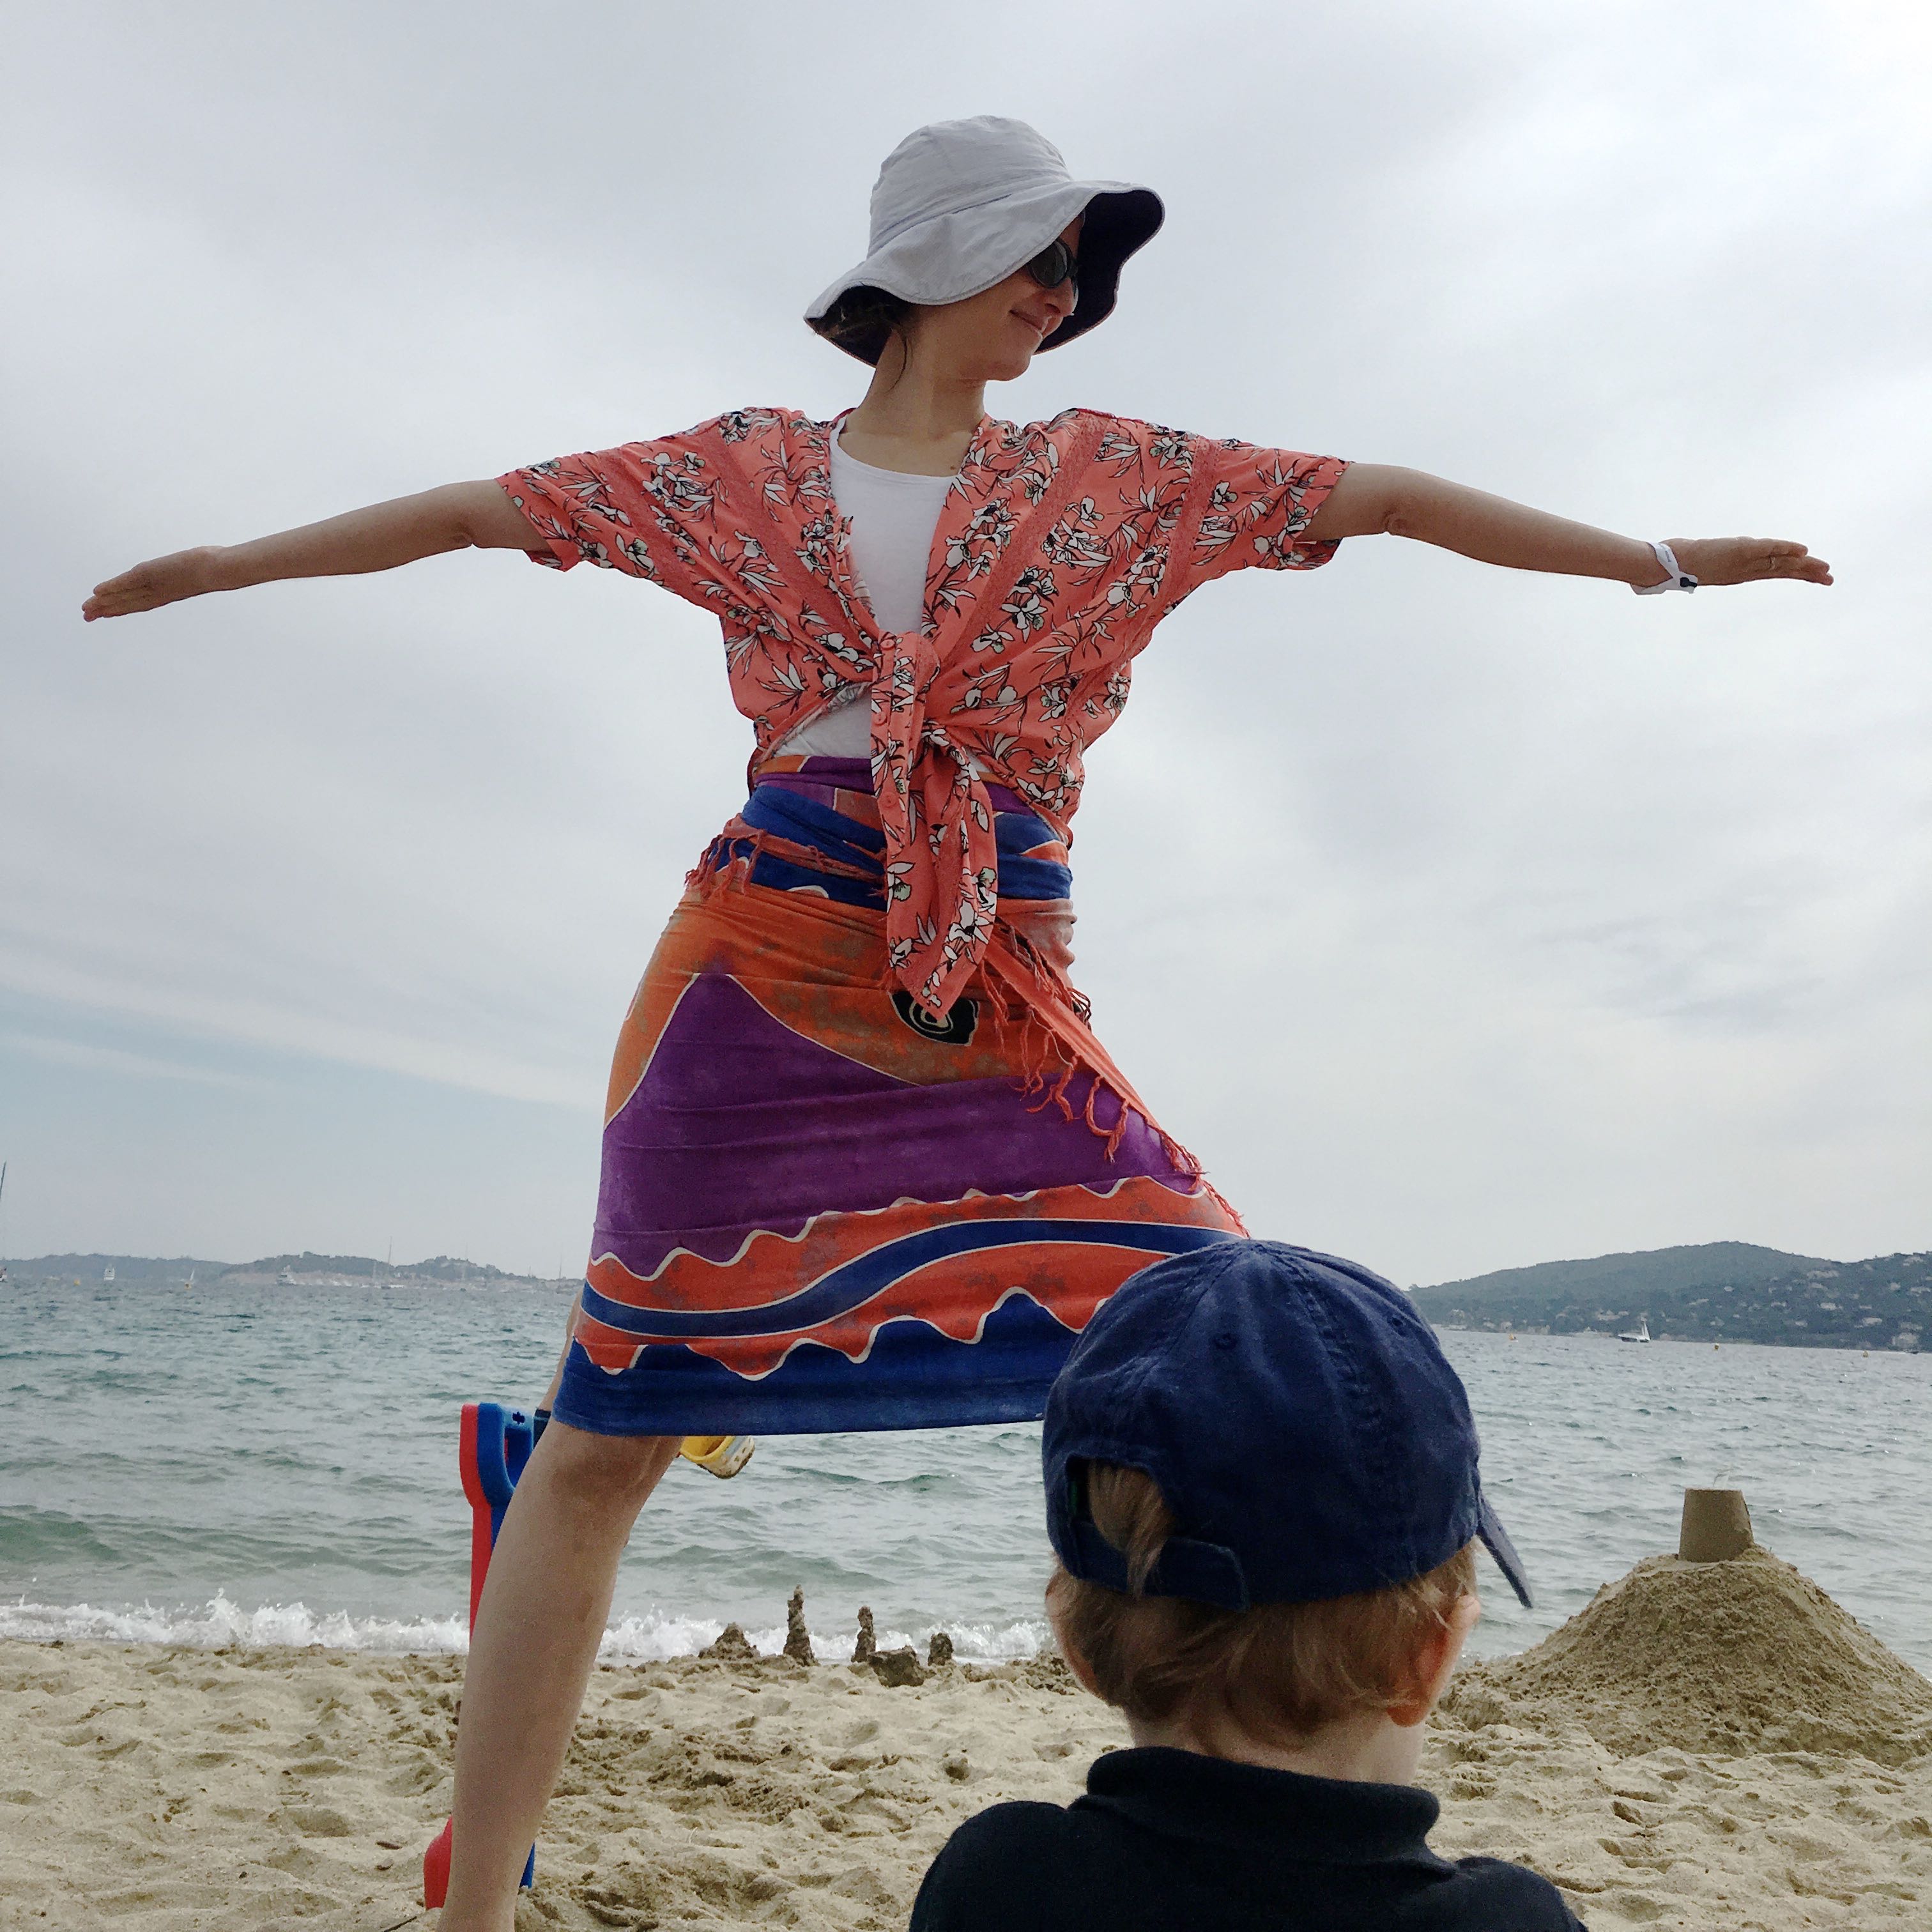 Lotte am Strand mit Kind